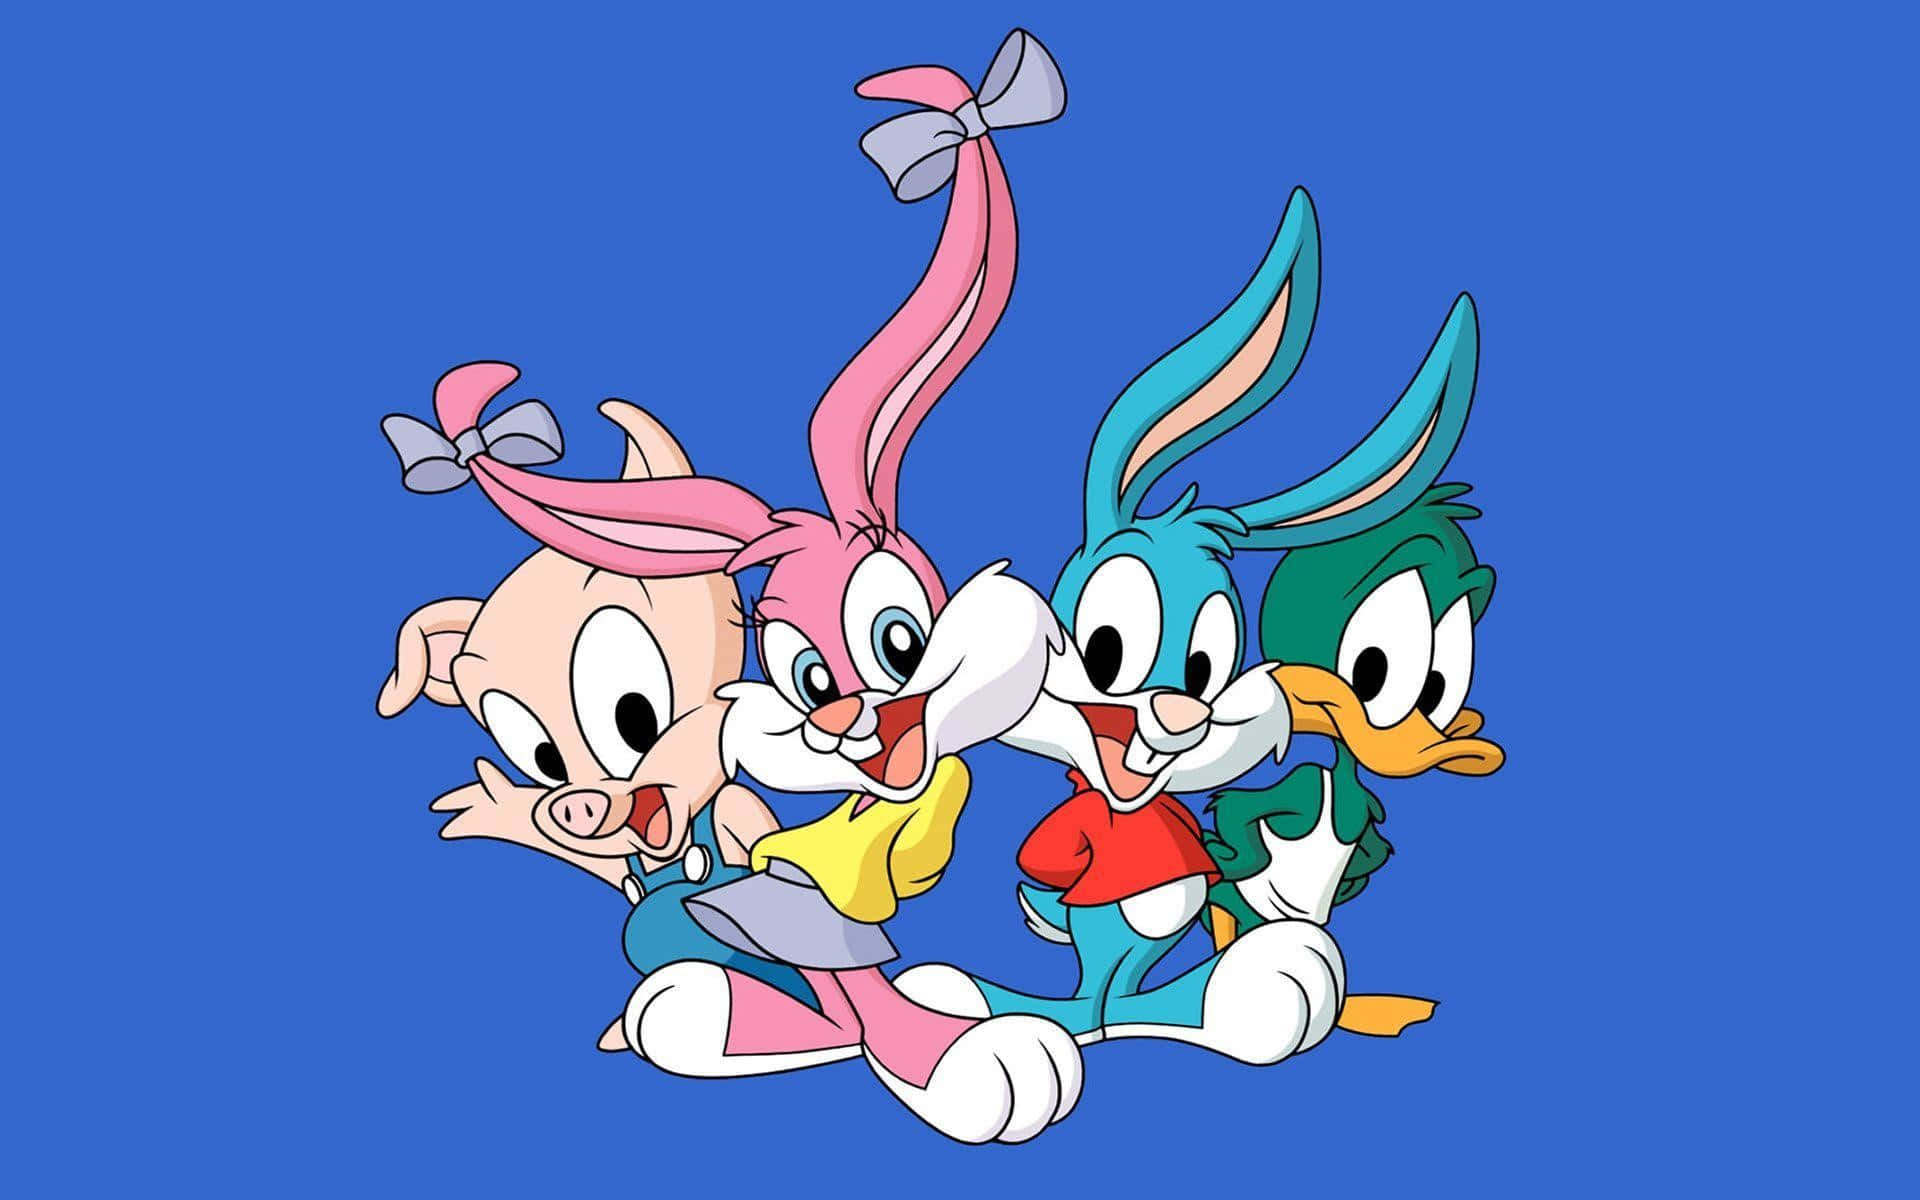 Show Us the Fun, Cartoon Characters Wonderland! Wallpaper